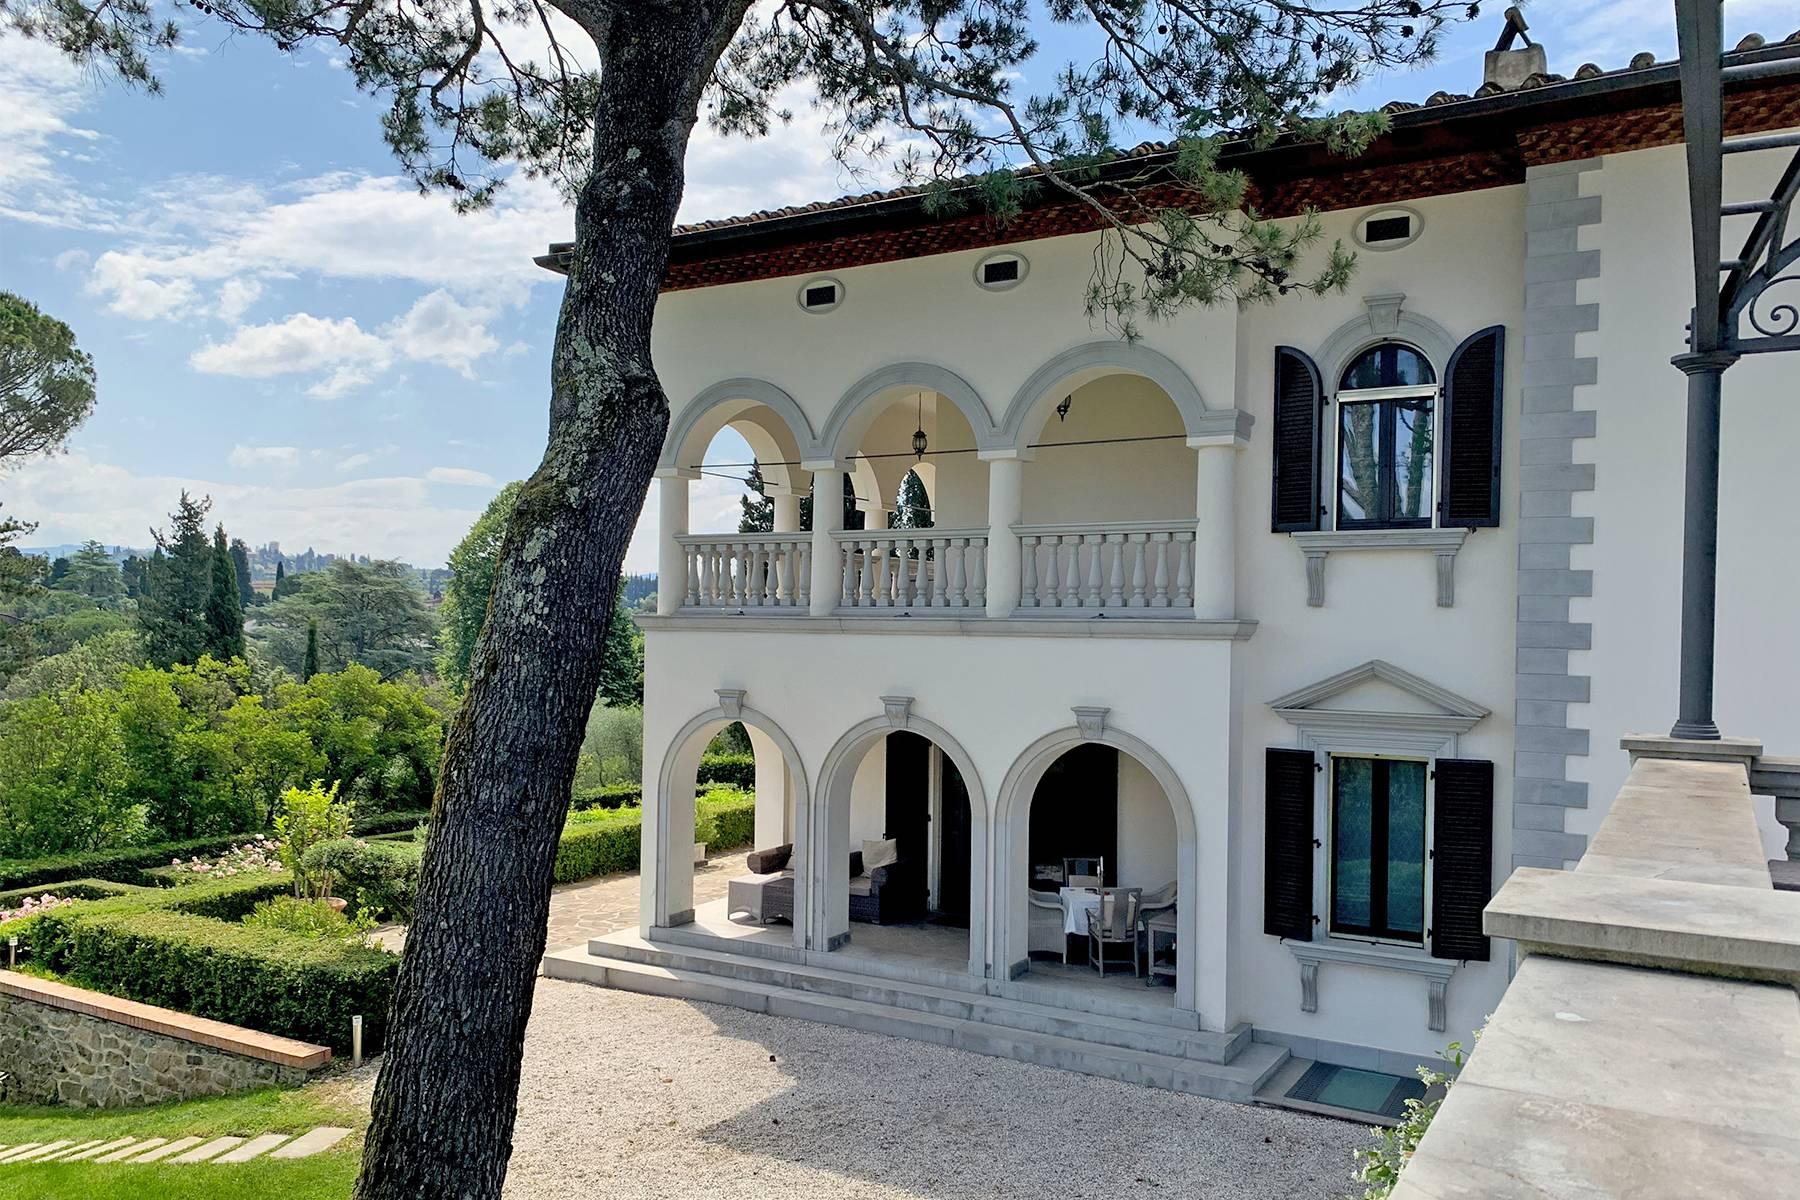 Splendid villa with pool on the Pian dei Giullari hill in Florence - 2